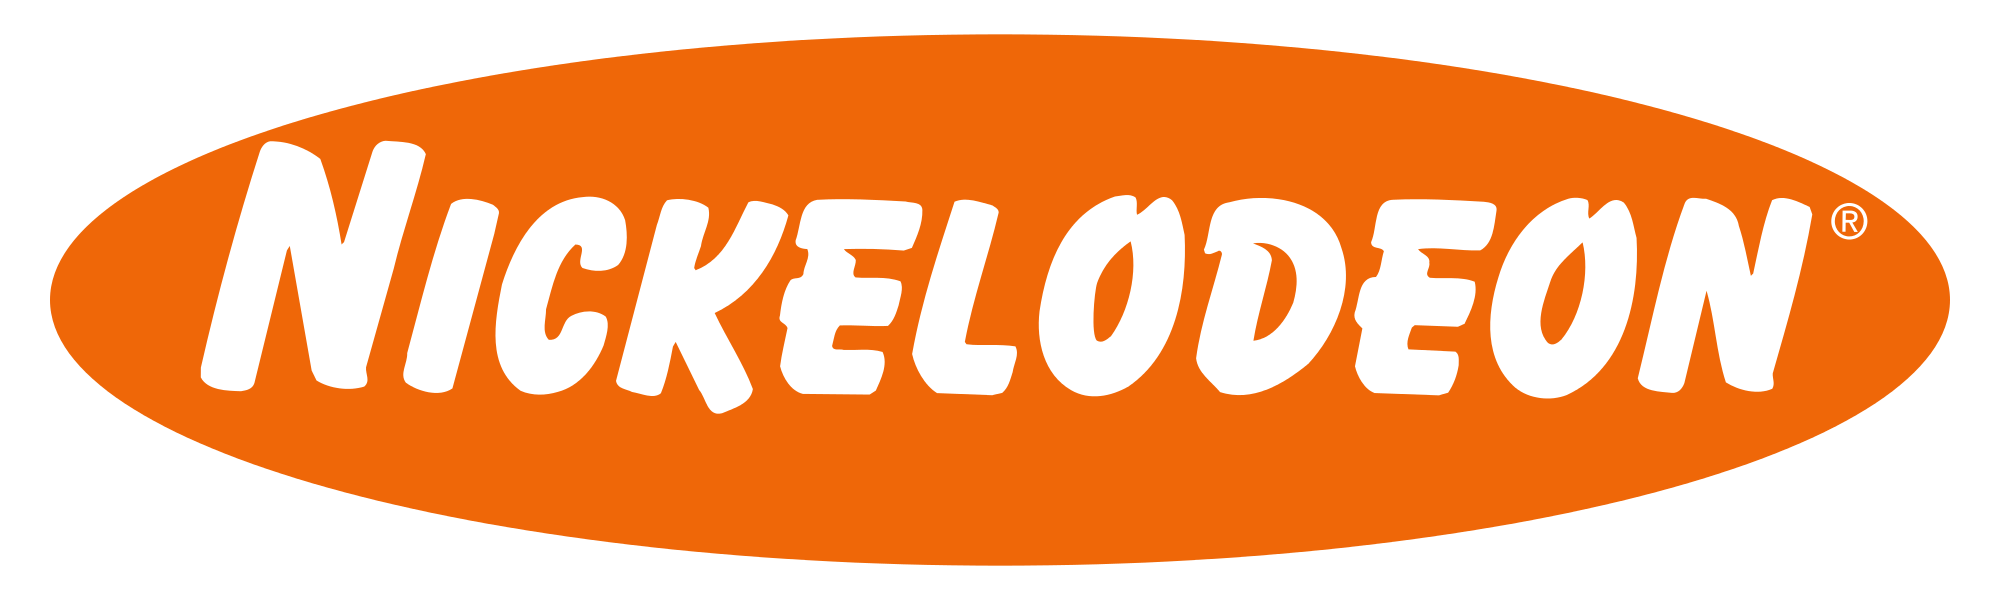 Nickelodeon Logo - Clean Nickelodeon Logo | Nickelodeon | Know Your Meme